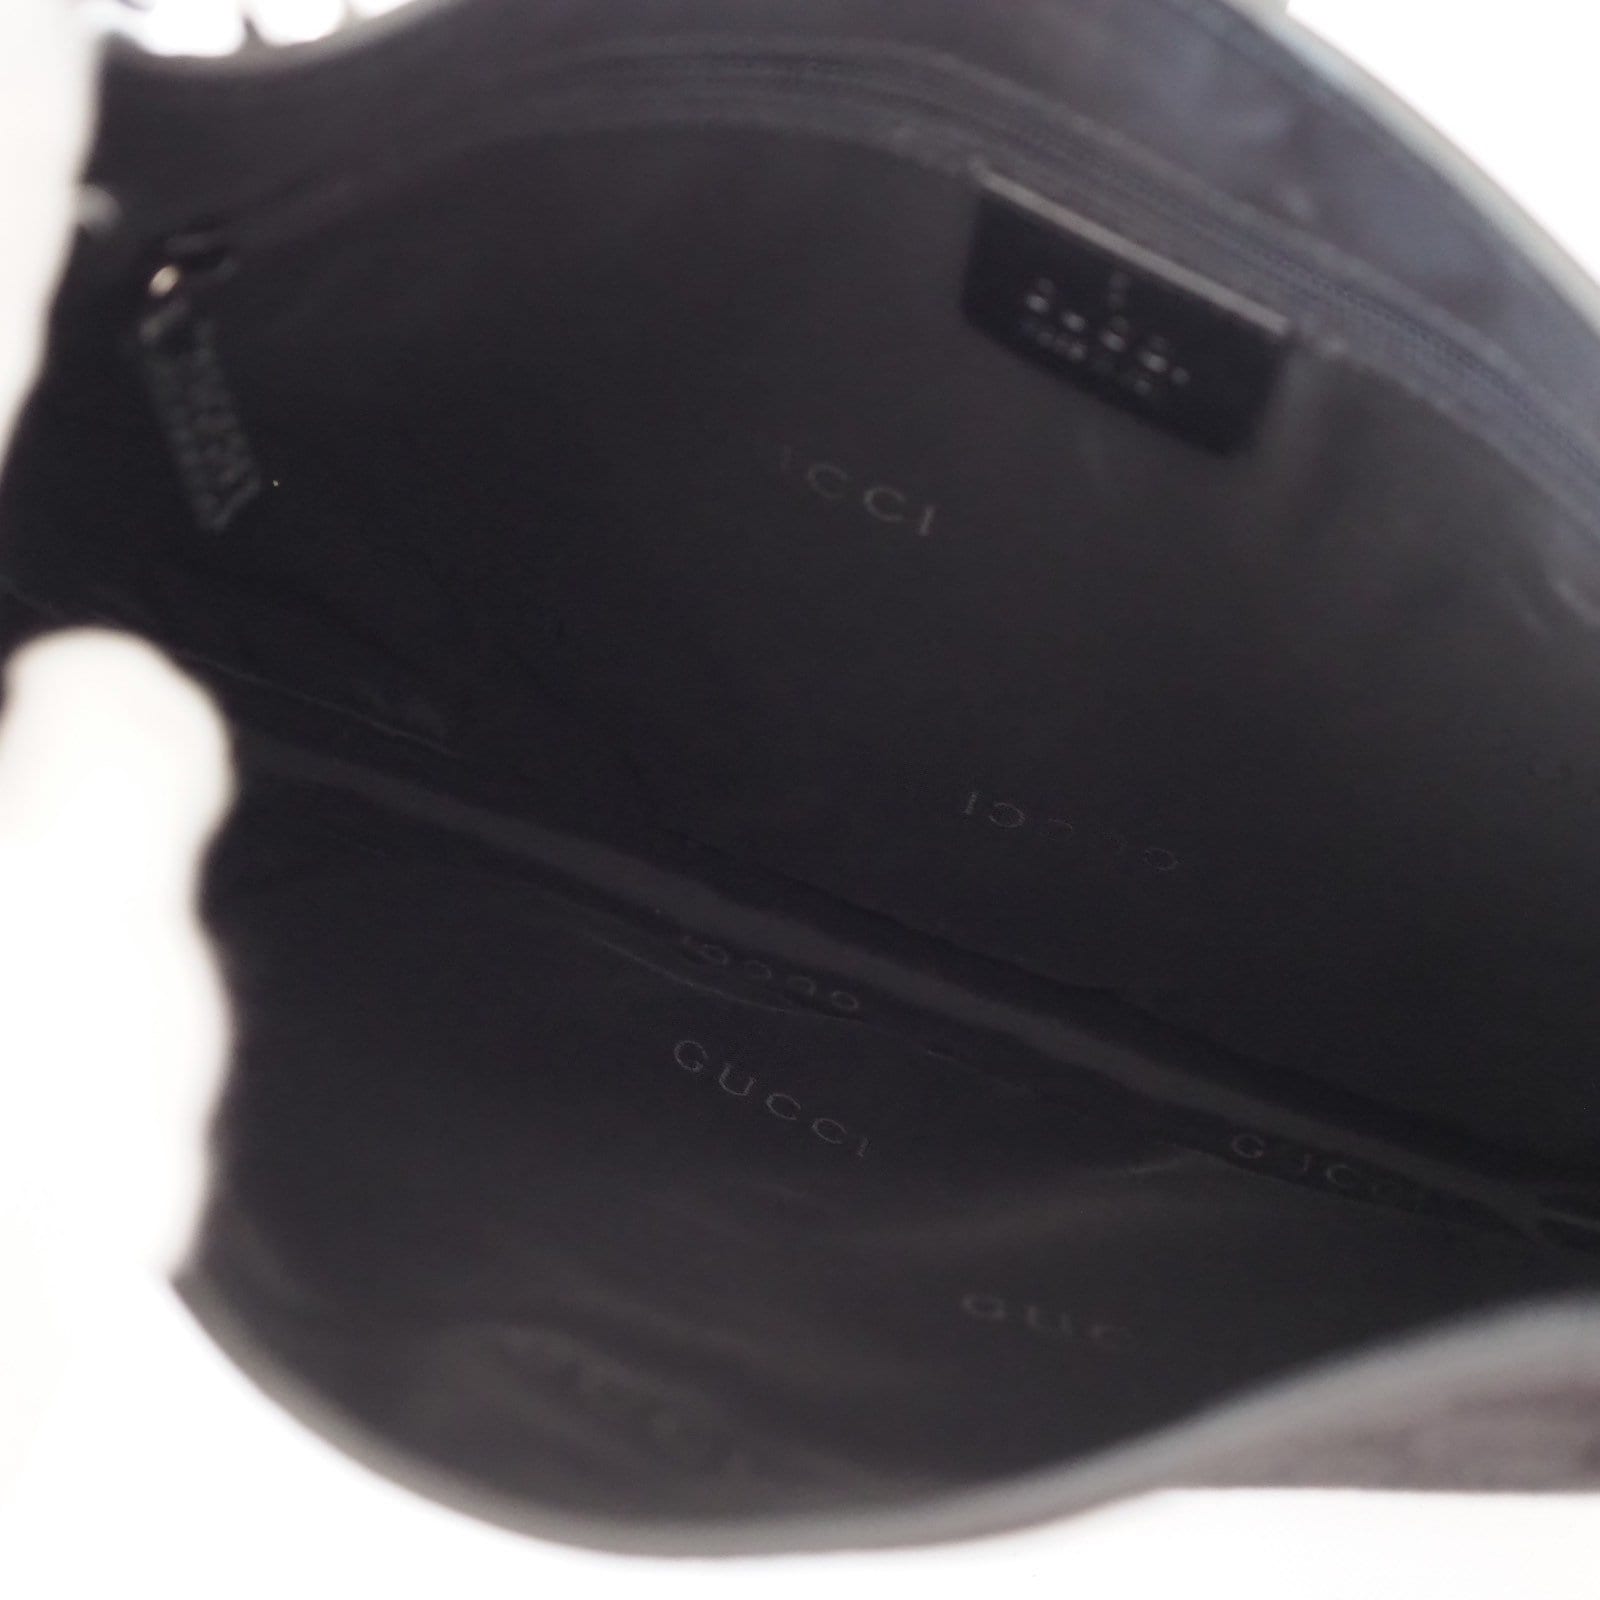 GUCCI Jackie GG Leather Canvas Chain Shoulder Bag Black Authentic